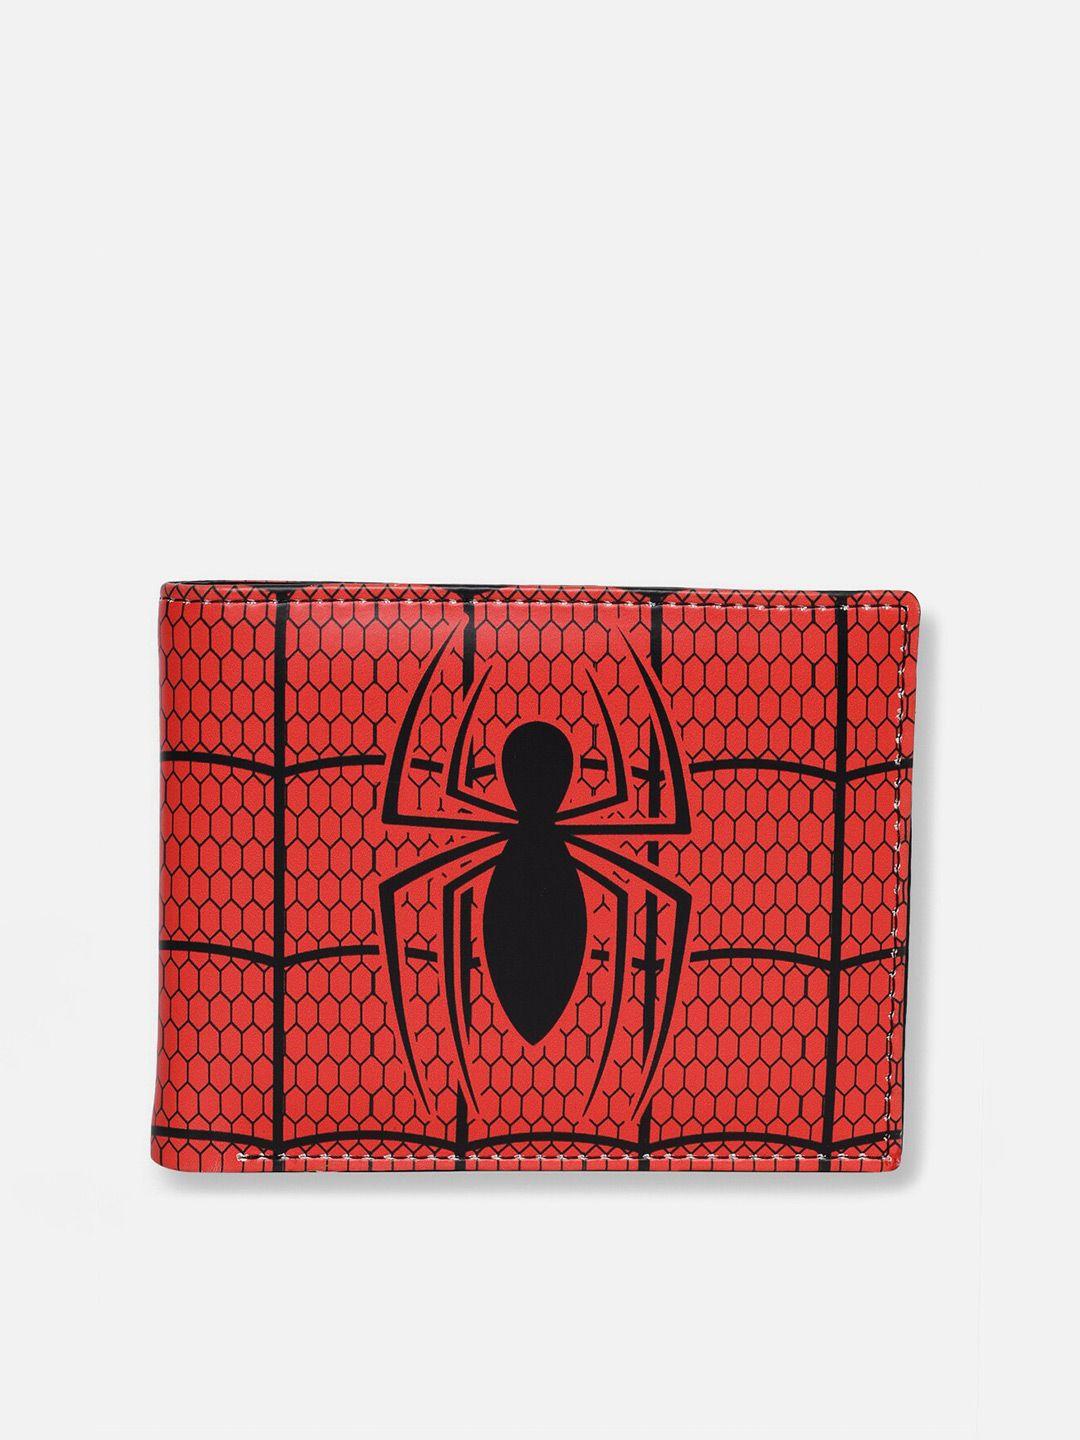 kara spider man printed two fold wallet